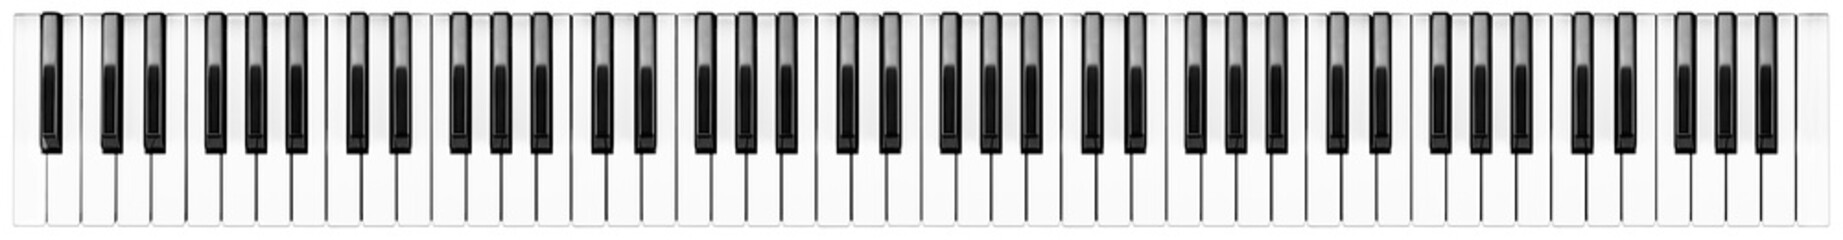 Full grand piano 88 black white keys keyboard layout isolated white wide panorama banner...